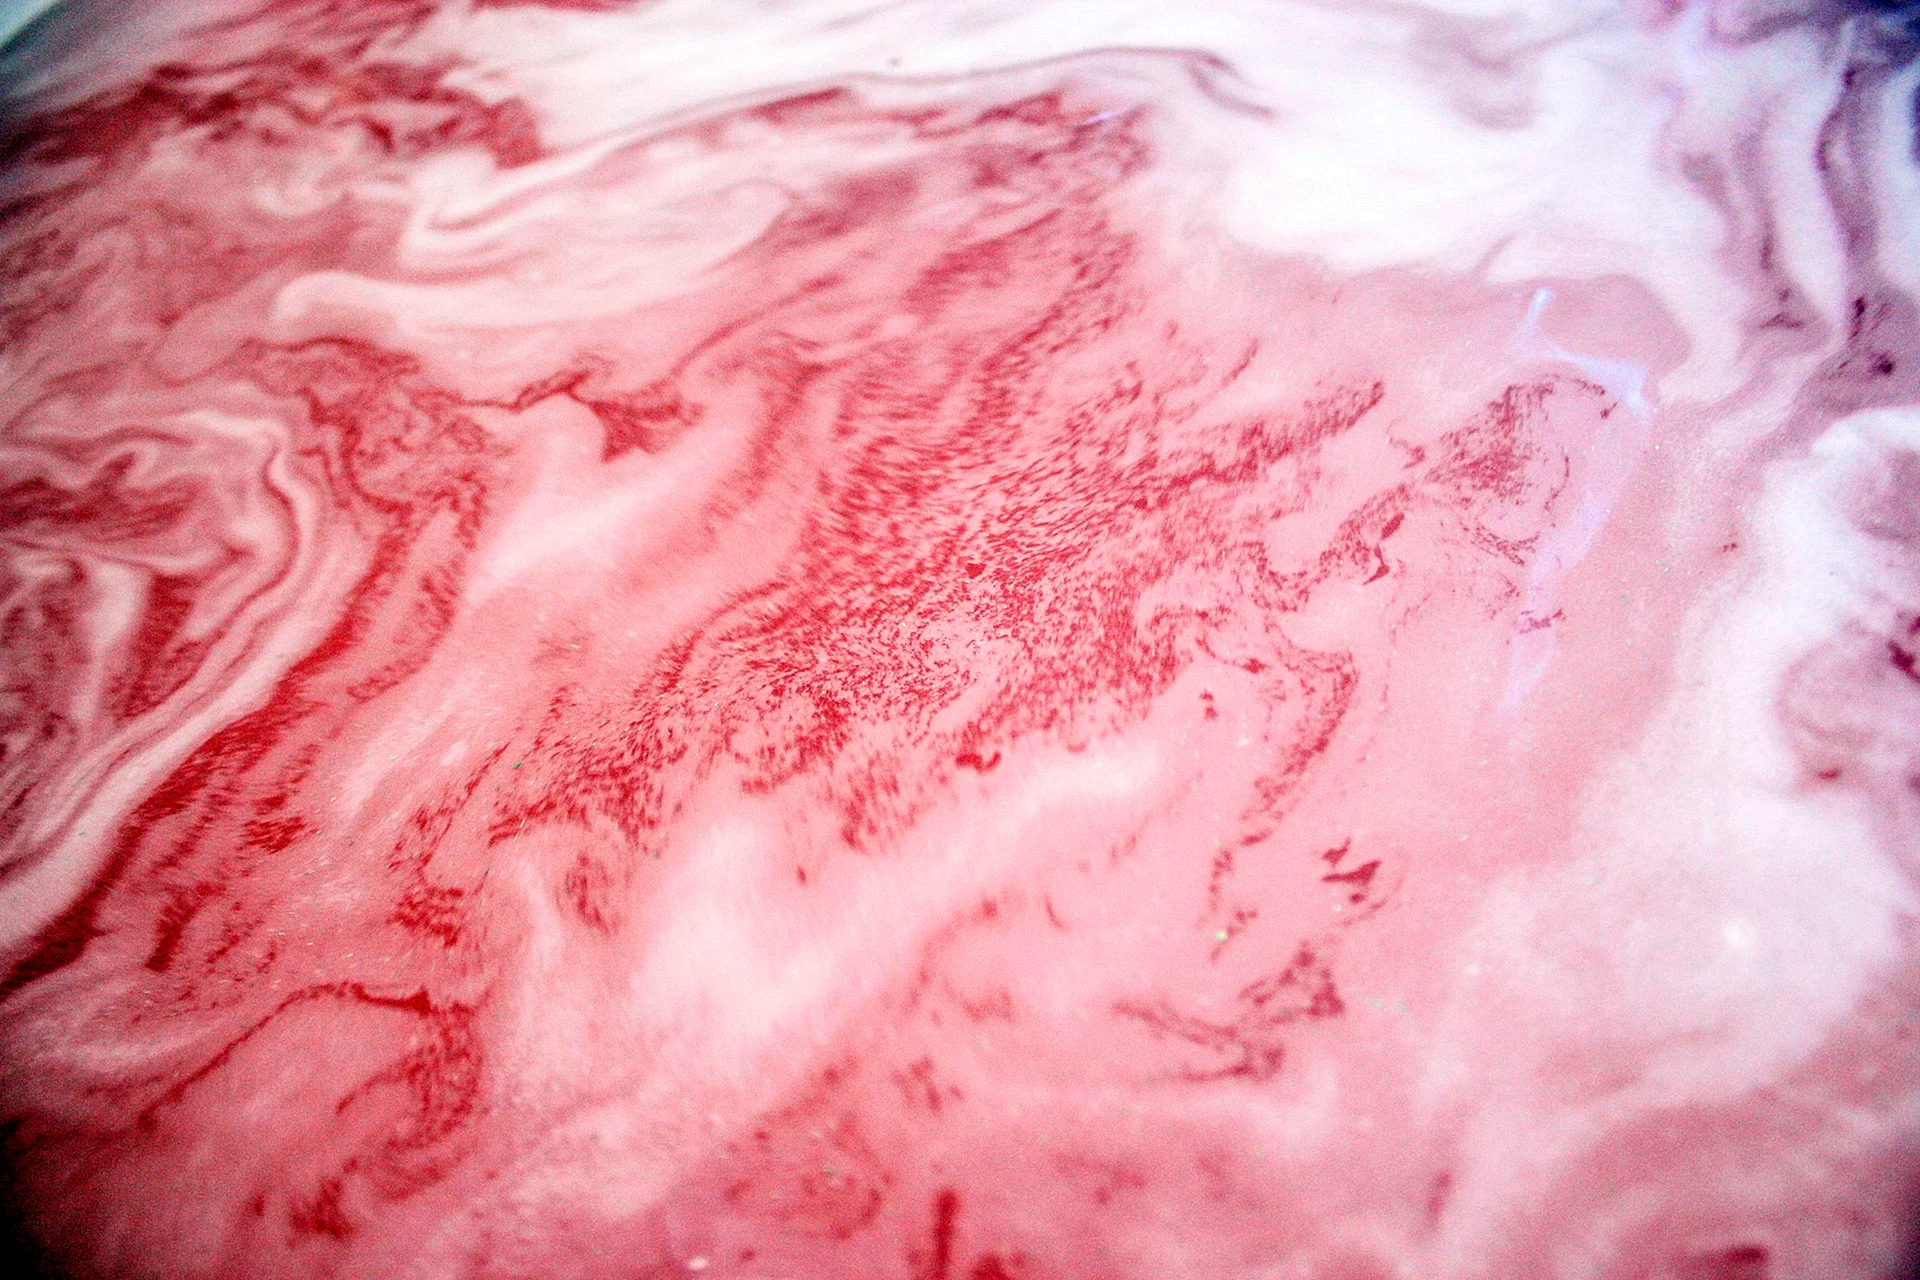 Marmol Pink Wallpaper